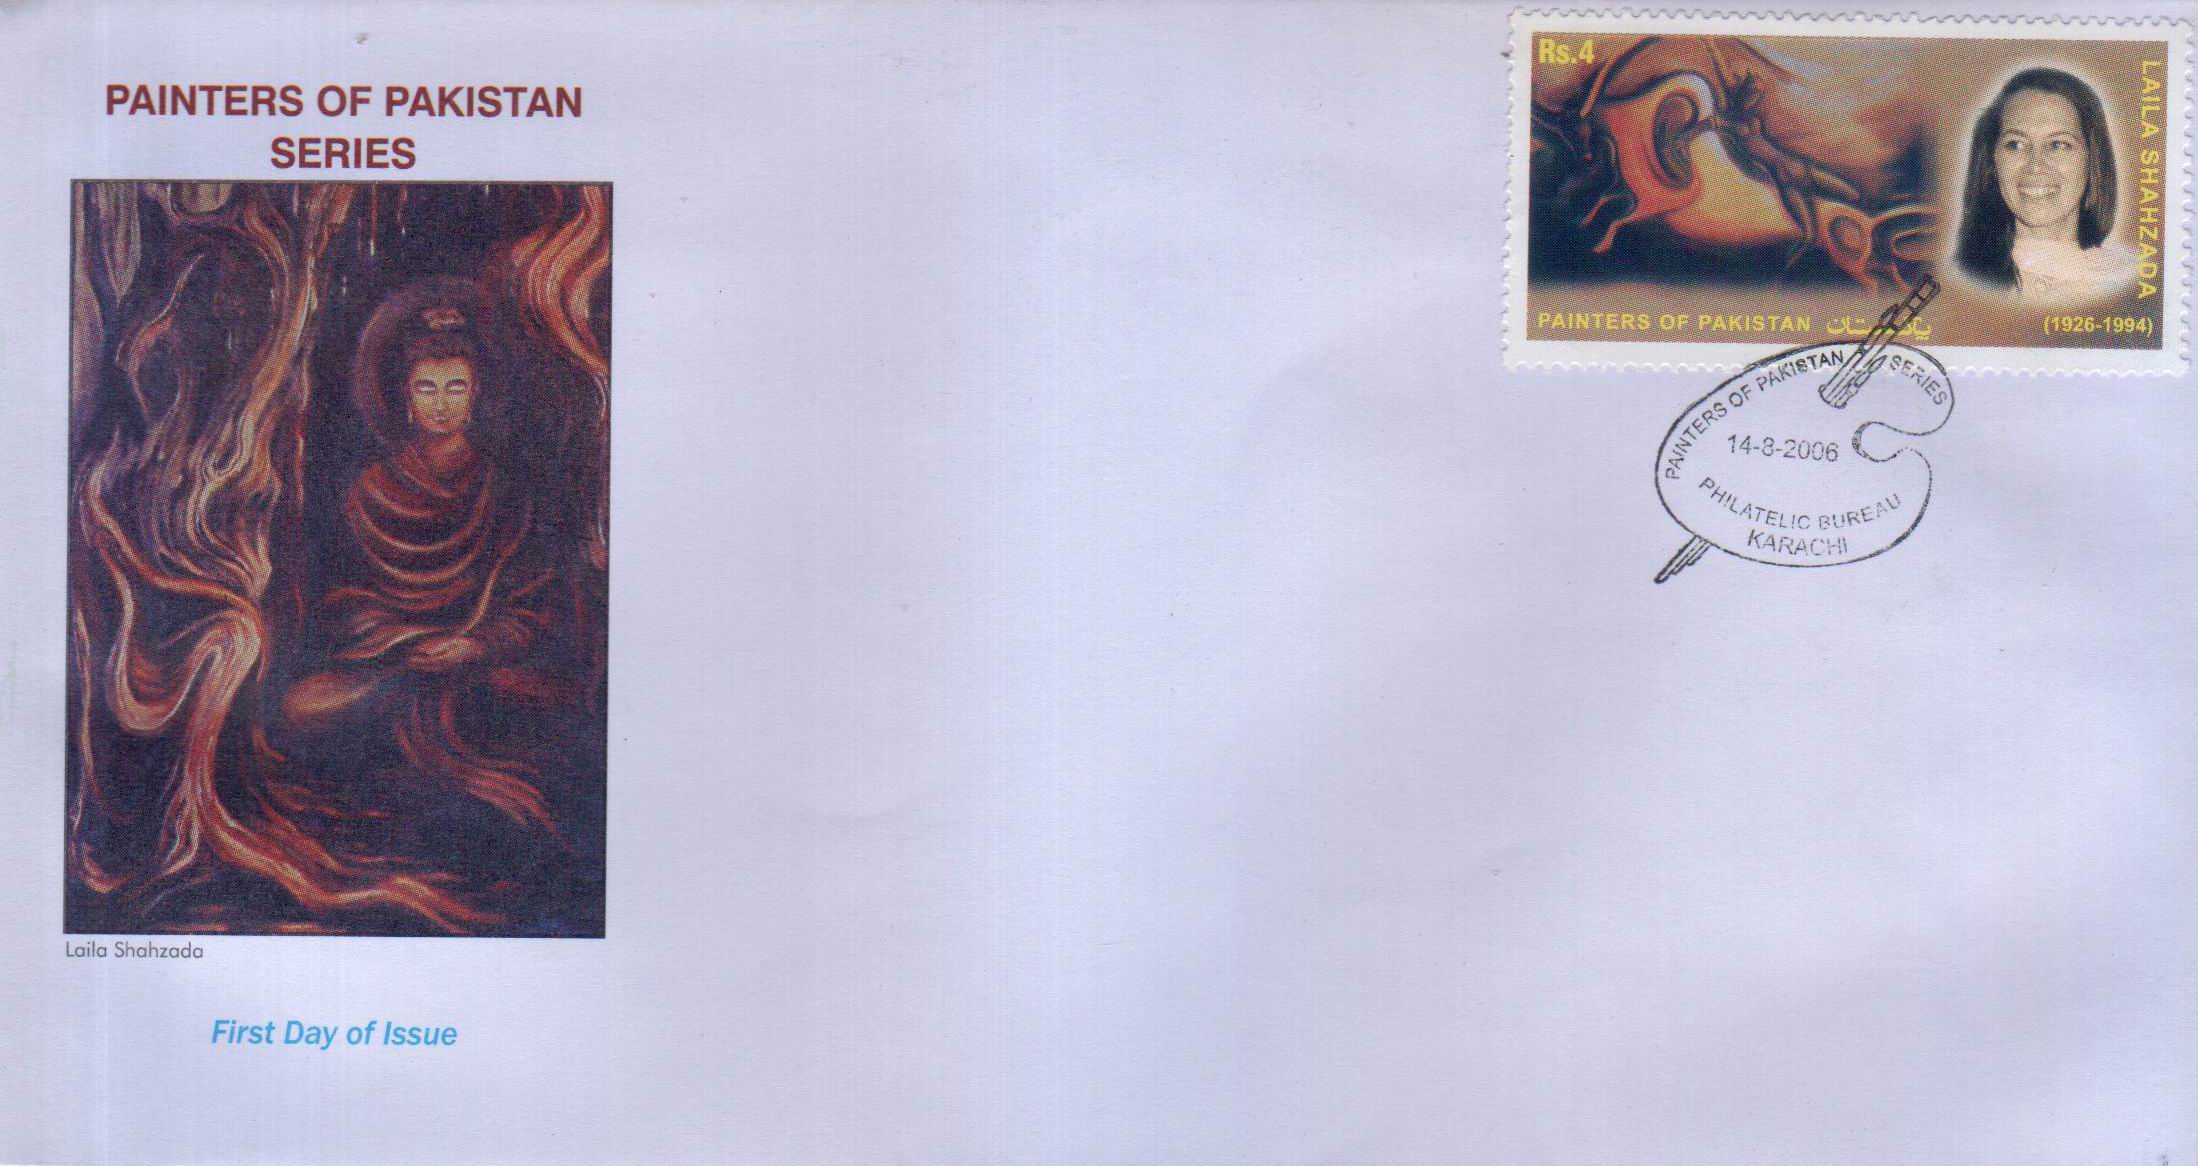 Pakistan Fdc 2006 Painters of Pakistan Series Sadequain